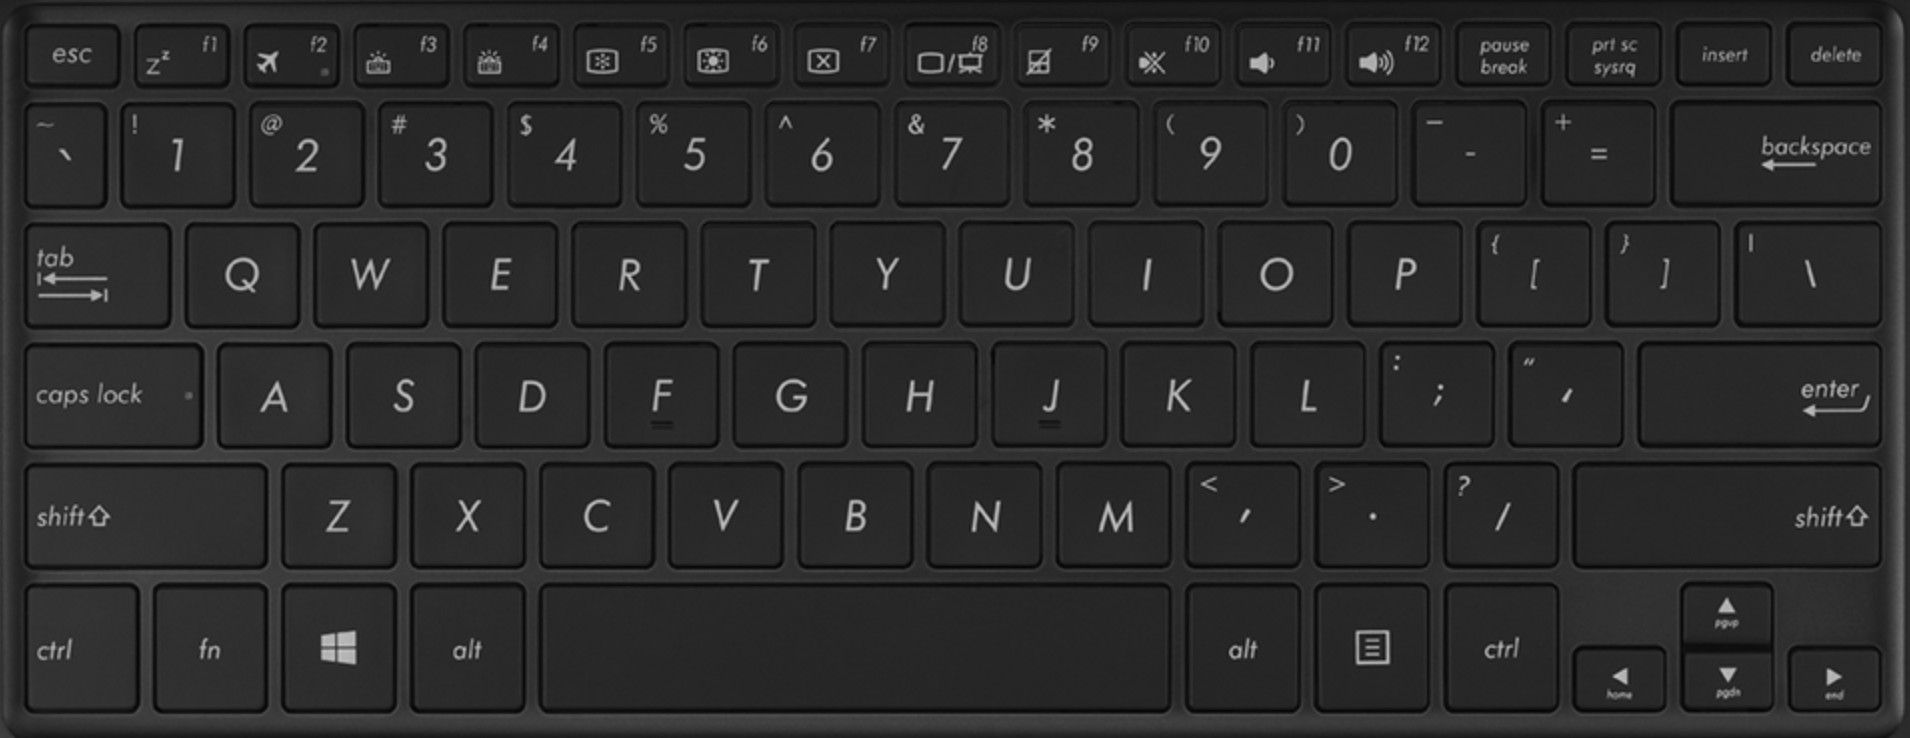 asus-UX360U-keyboard-key-replacement.jpg